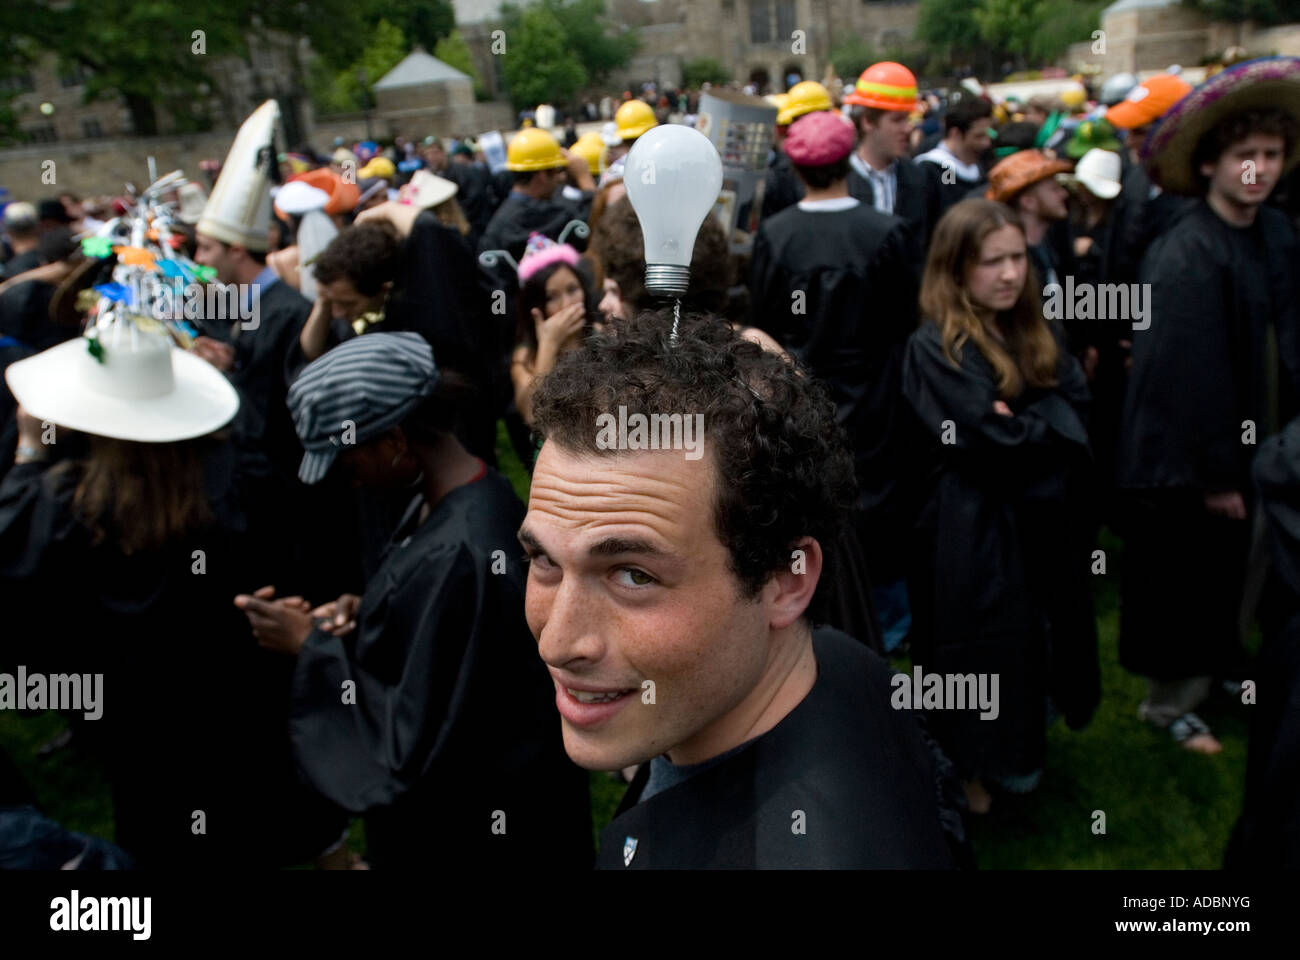 Yale Graduation Commencementa graduate with a light bulb on head Stock Photo